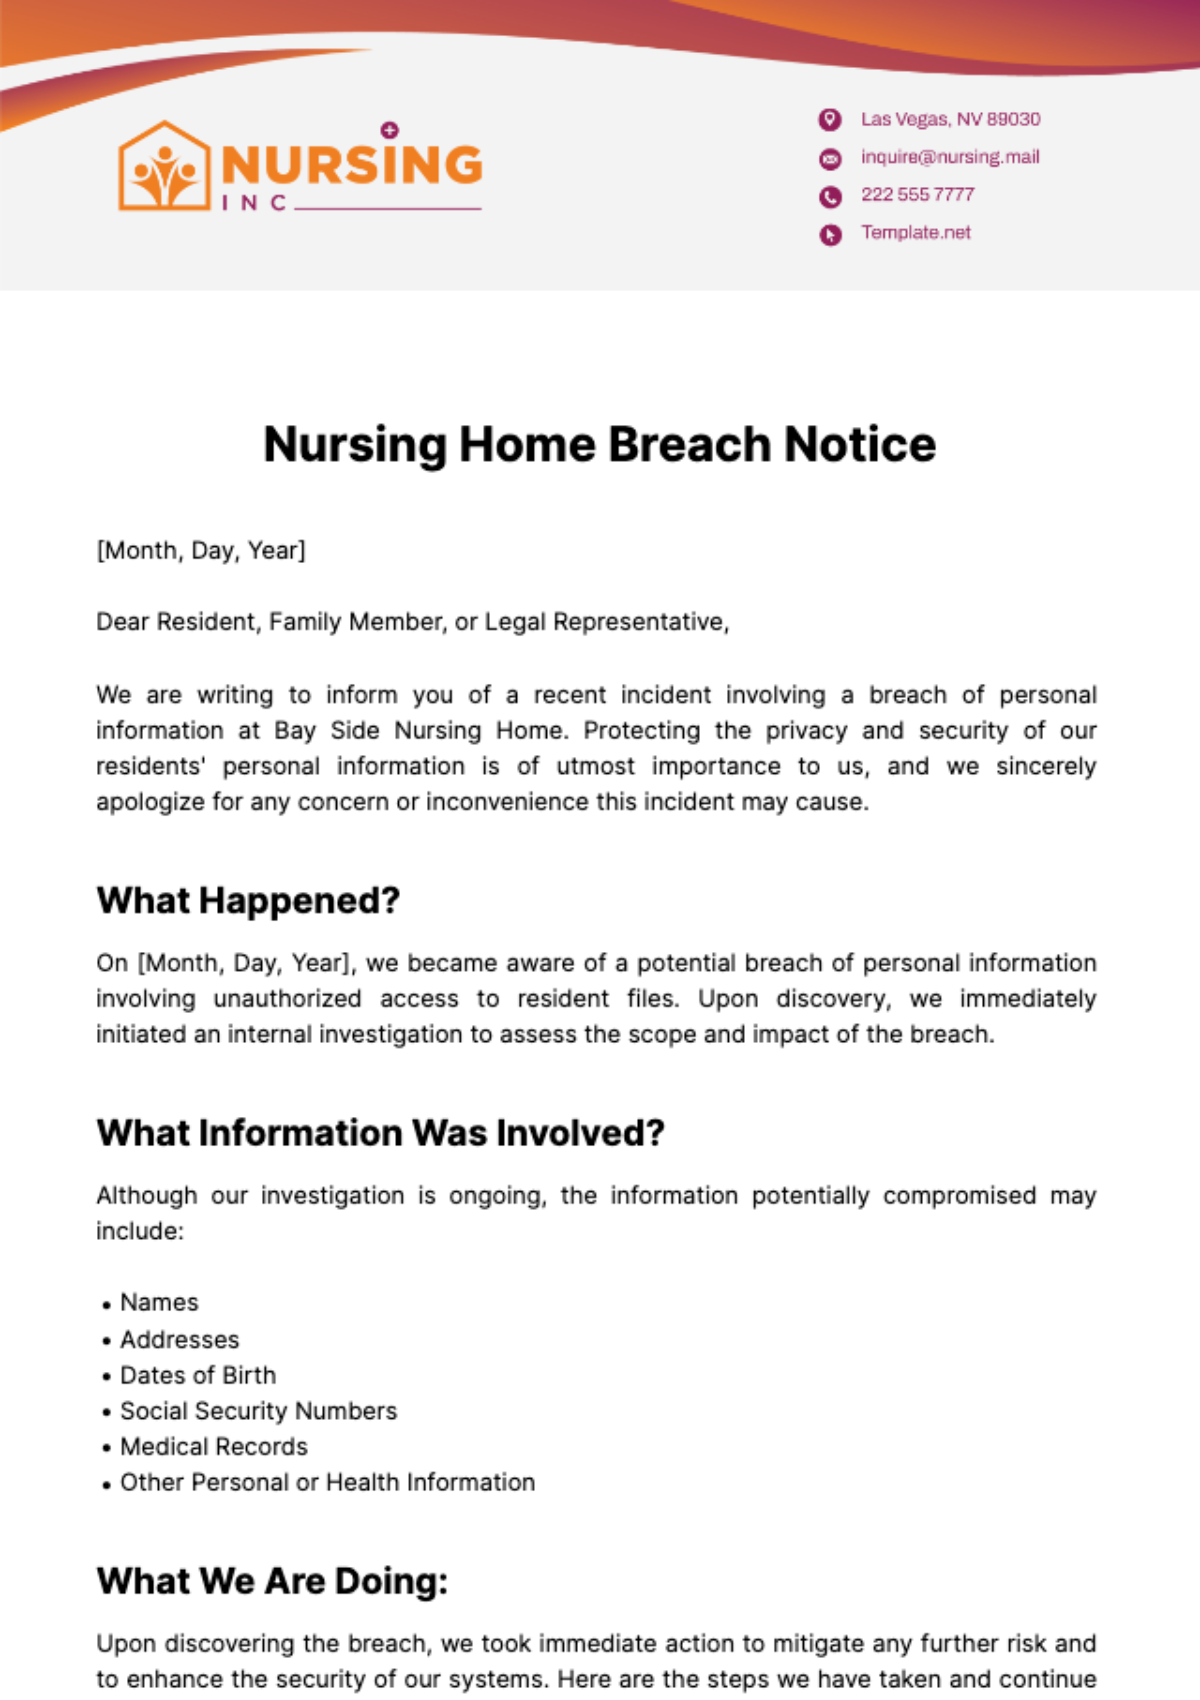 Nursing Home Breach Notice Template